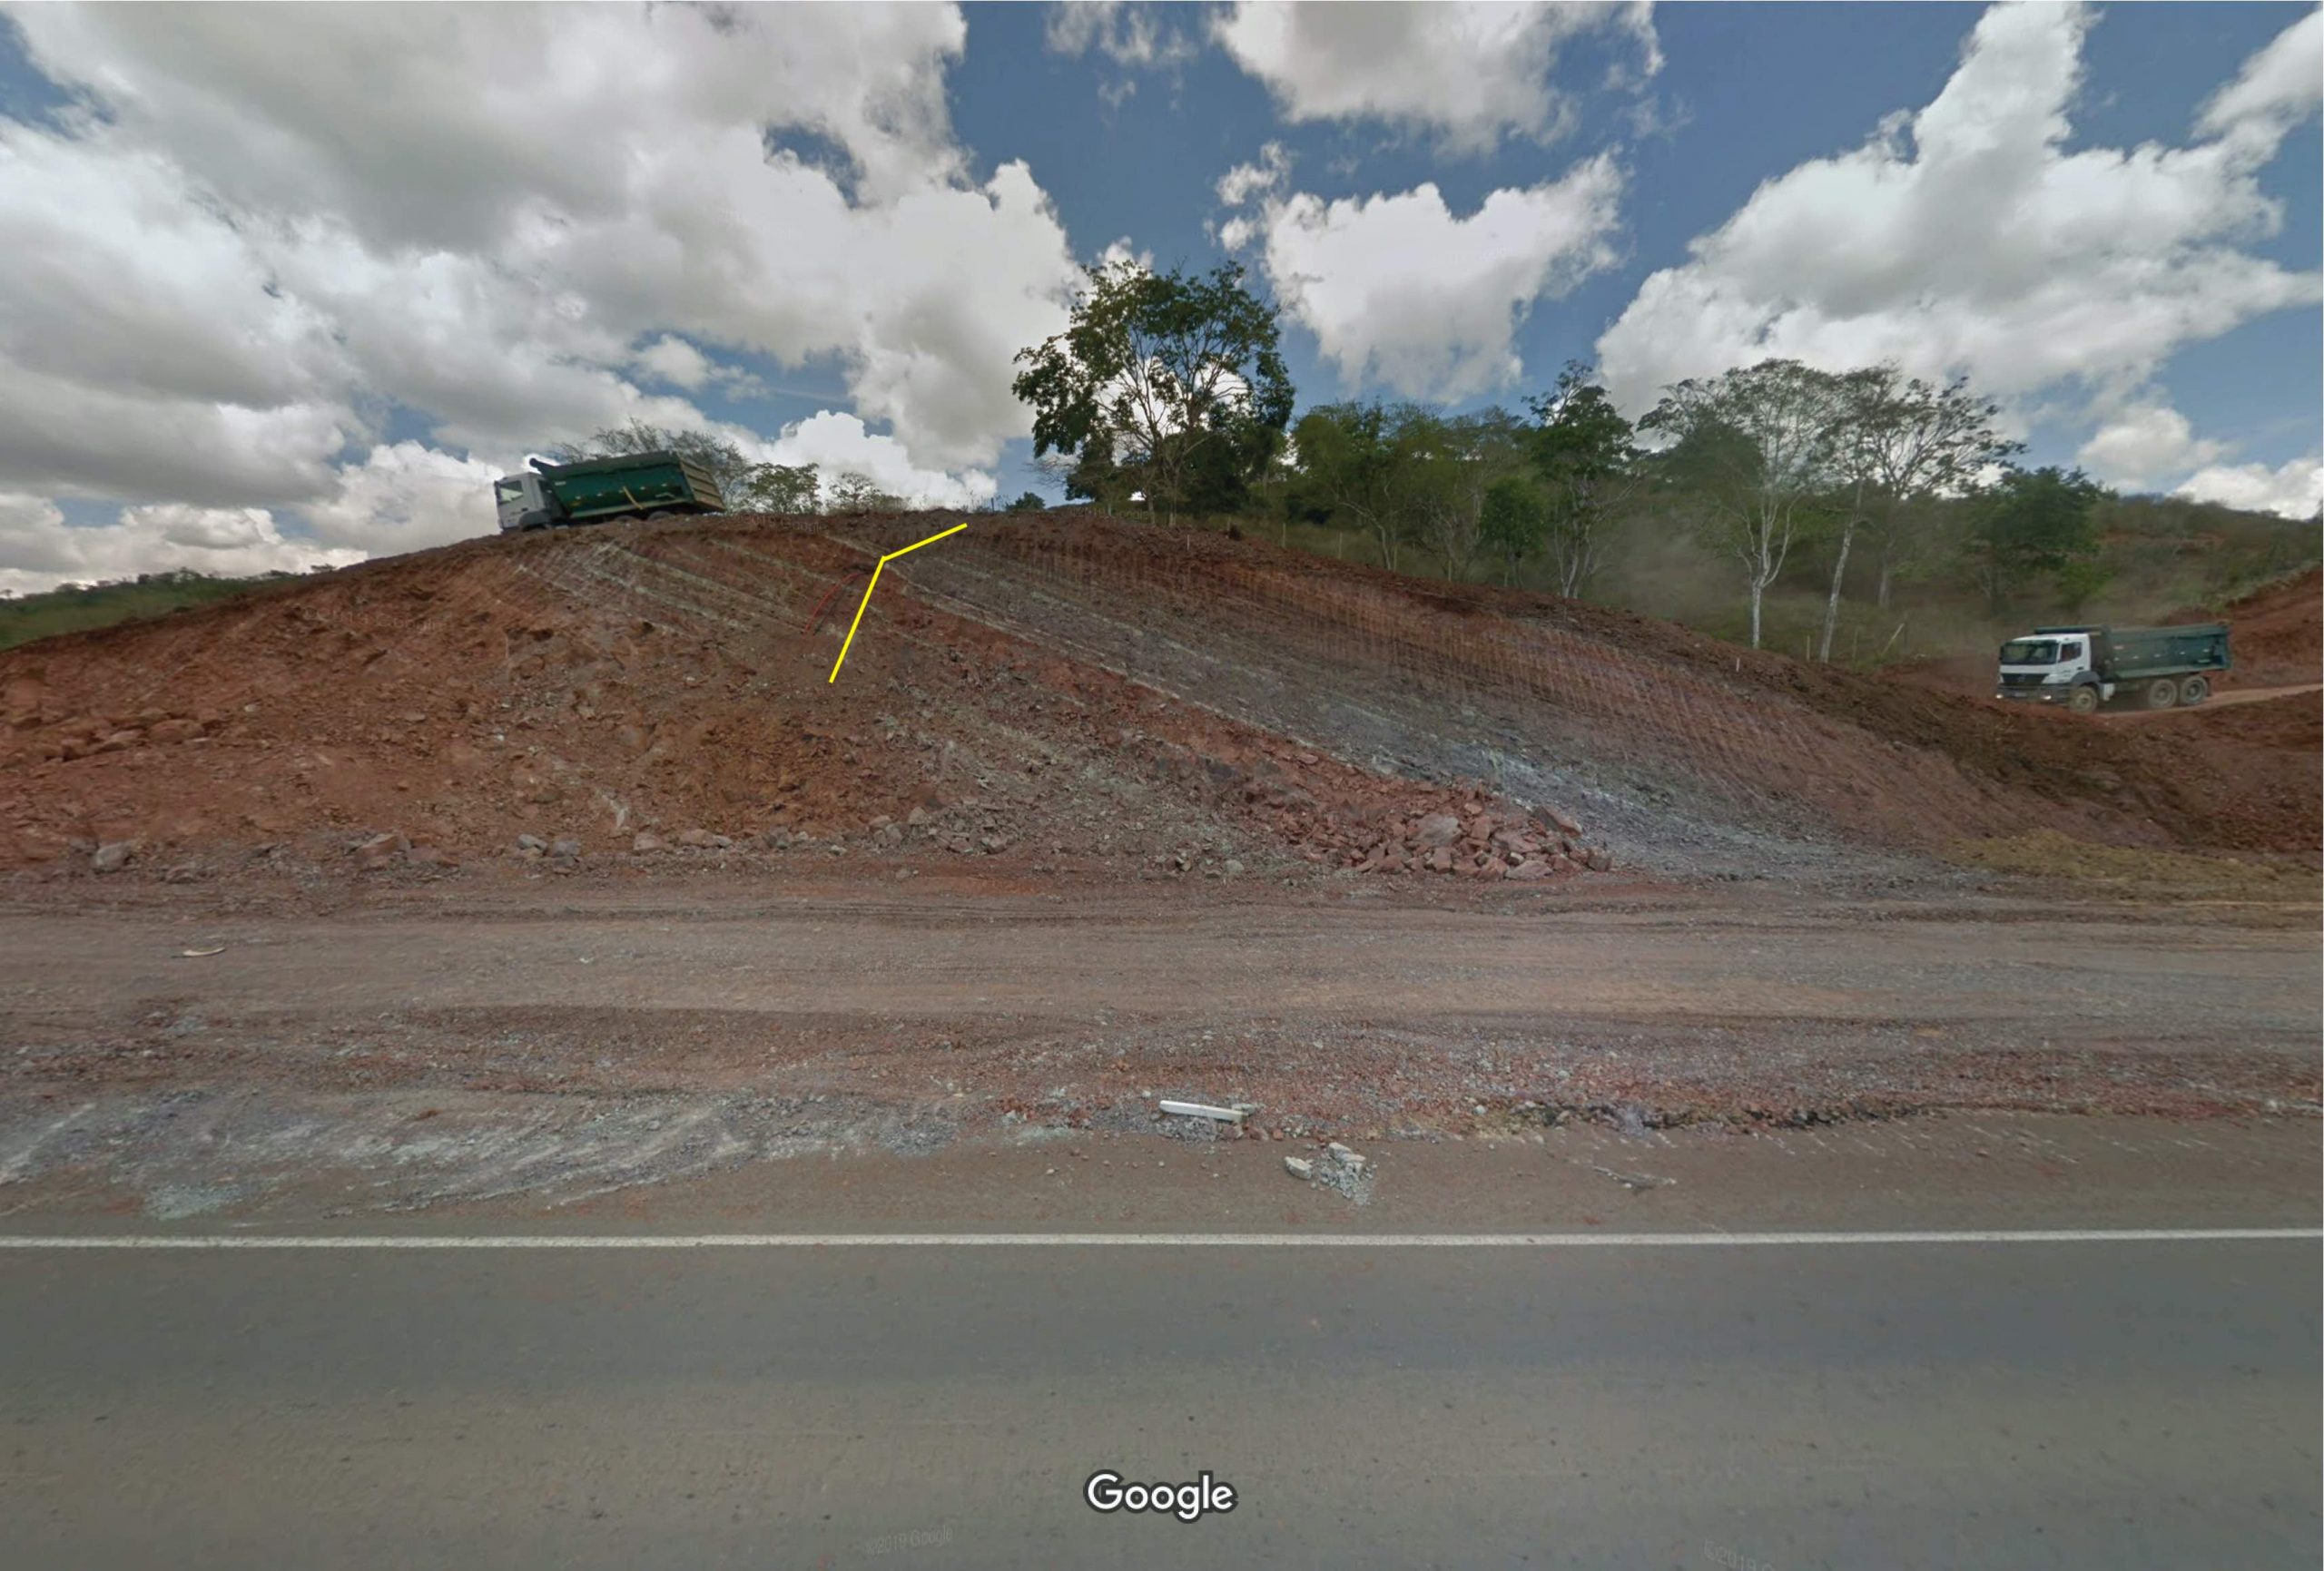 Dom João Formation along BR 101 about 14 km southwest of Algoinhas, Brazil